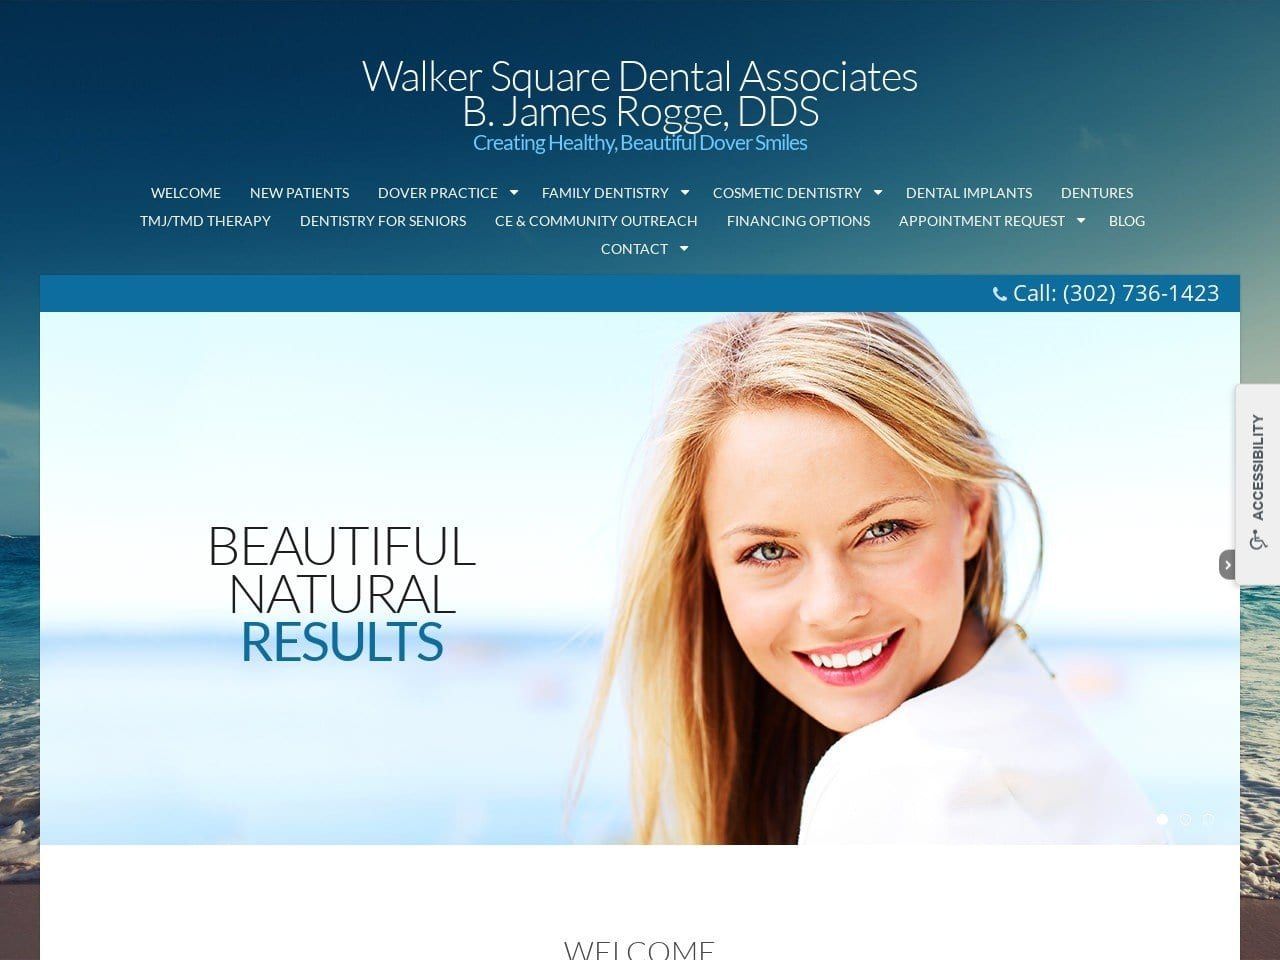 Walkersquare Dental Website Screenshot from walkersquaredental.com